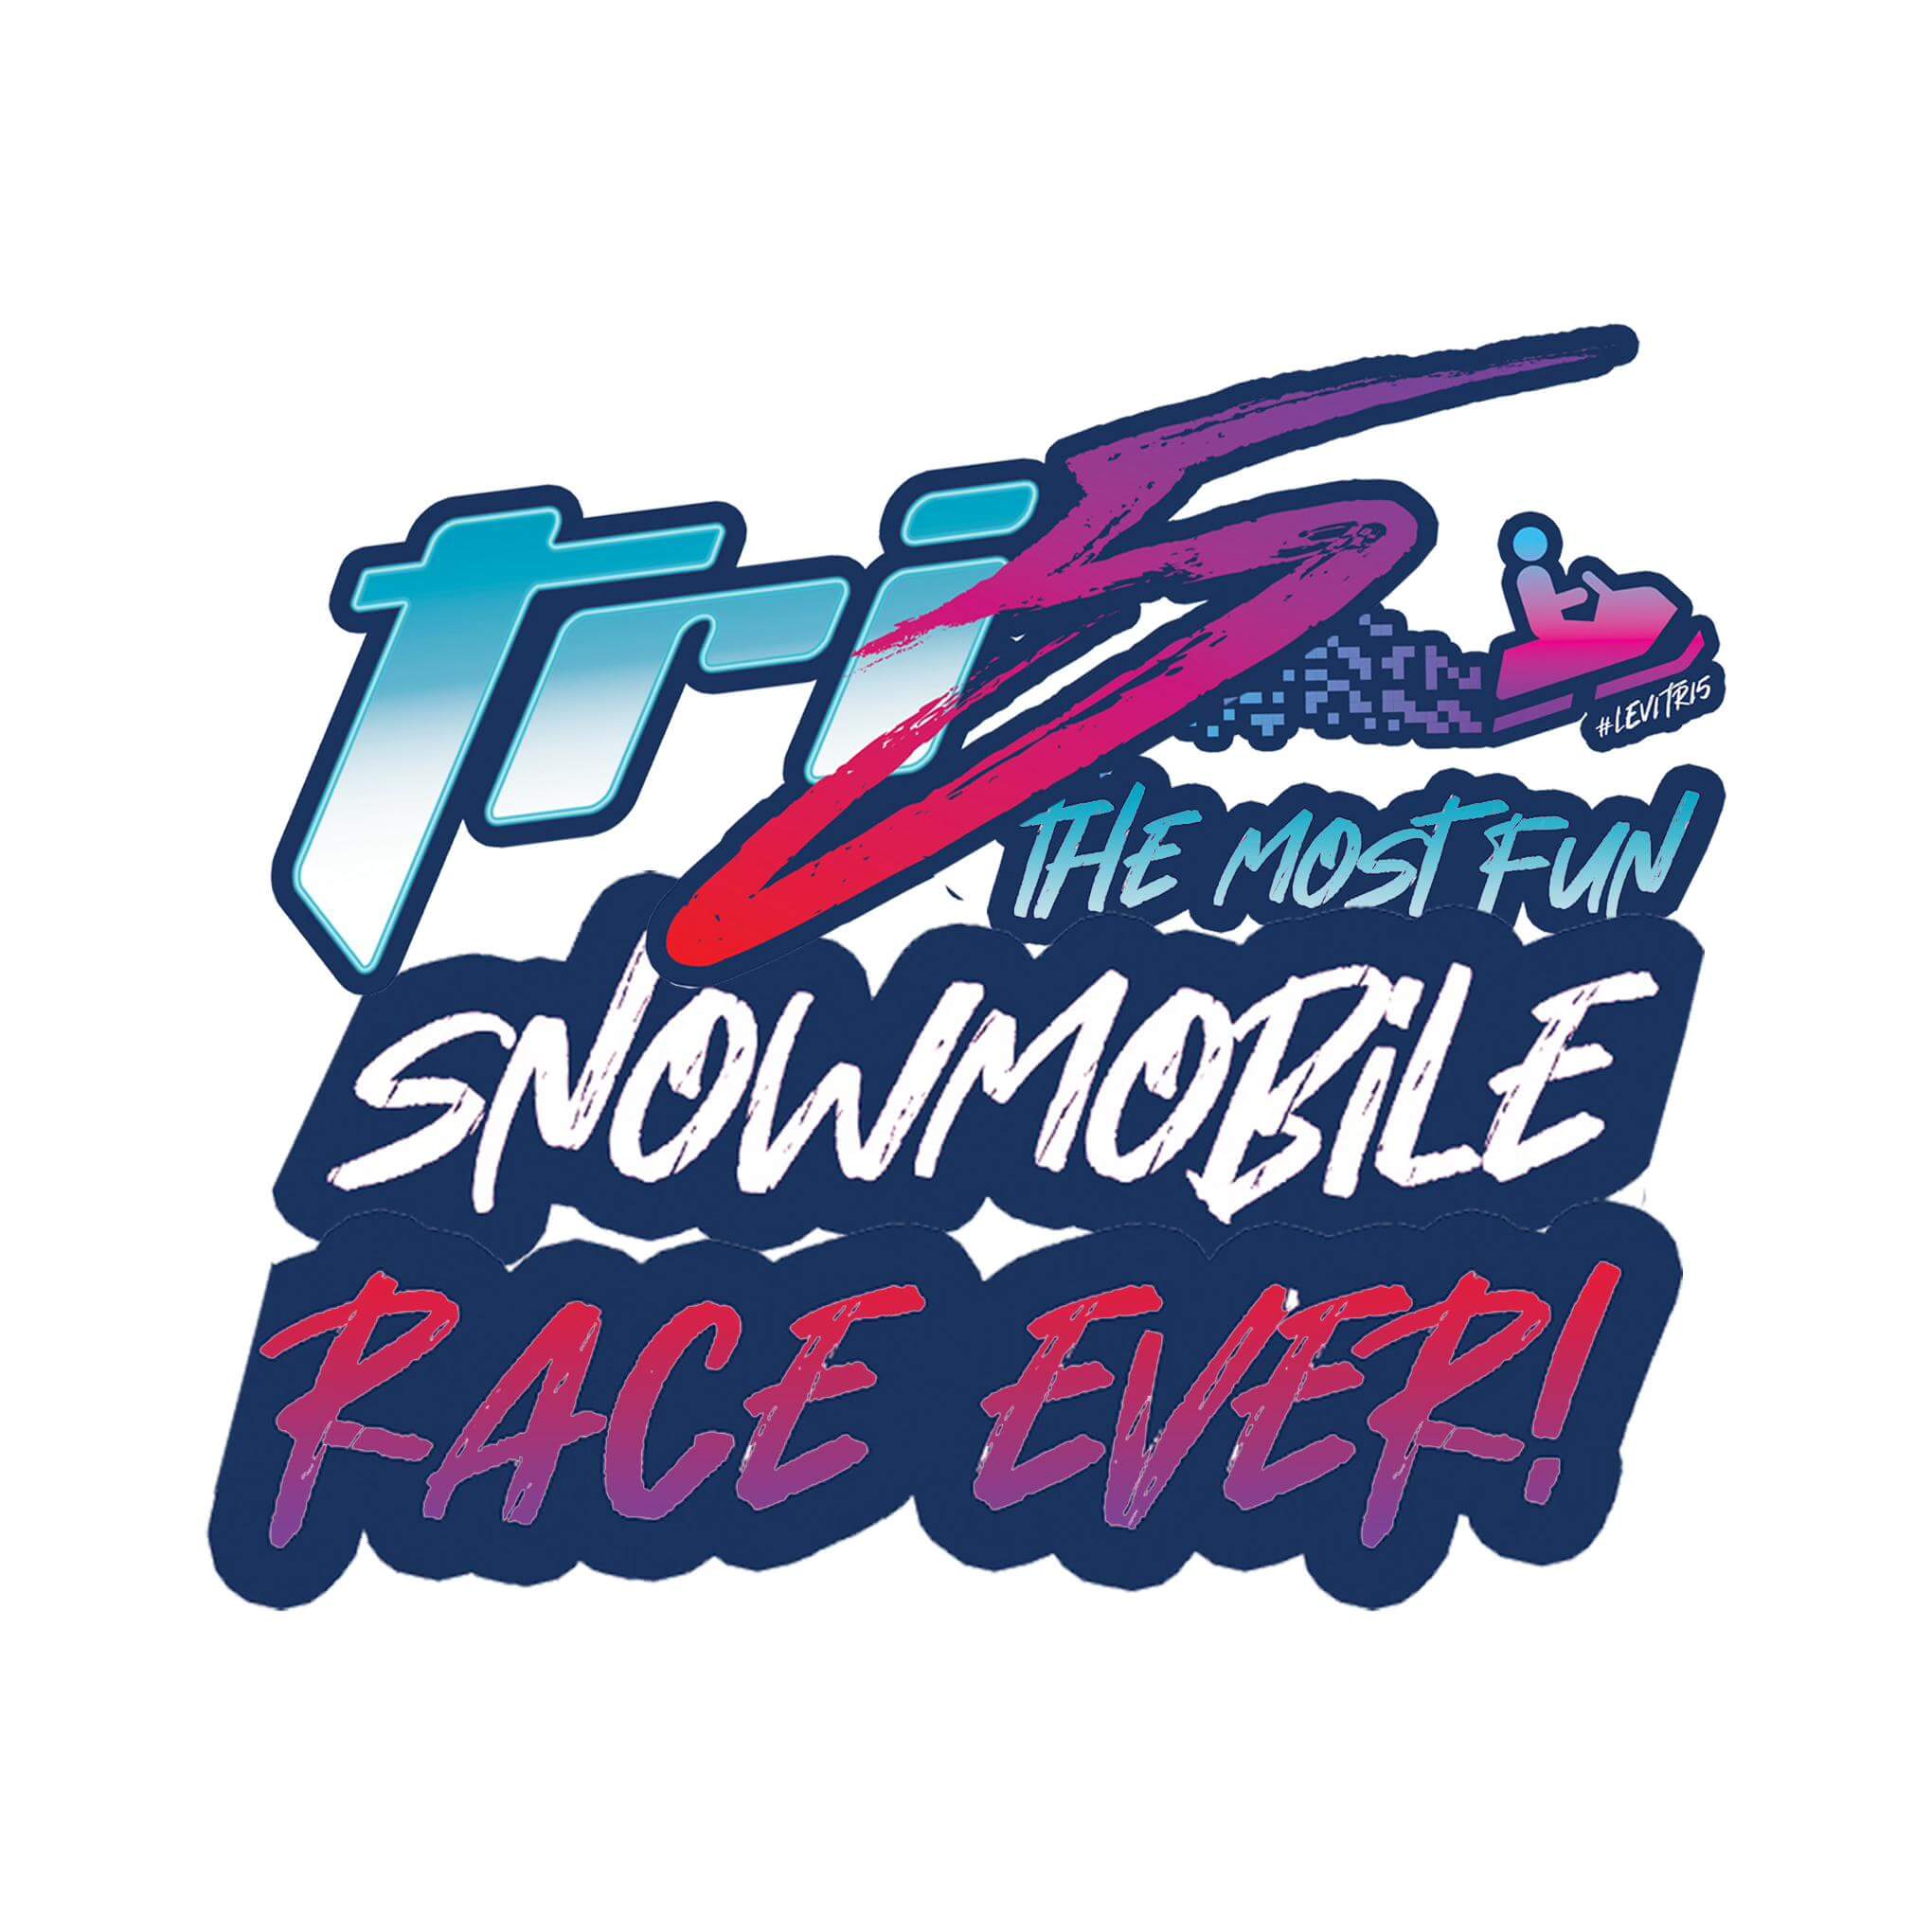 Levi's Tri 5 logo The Most Fun Snowmobile Race Ever